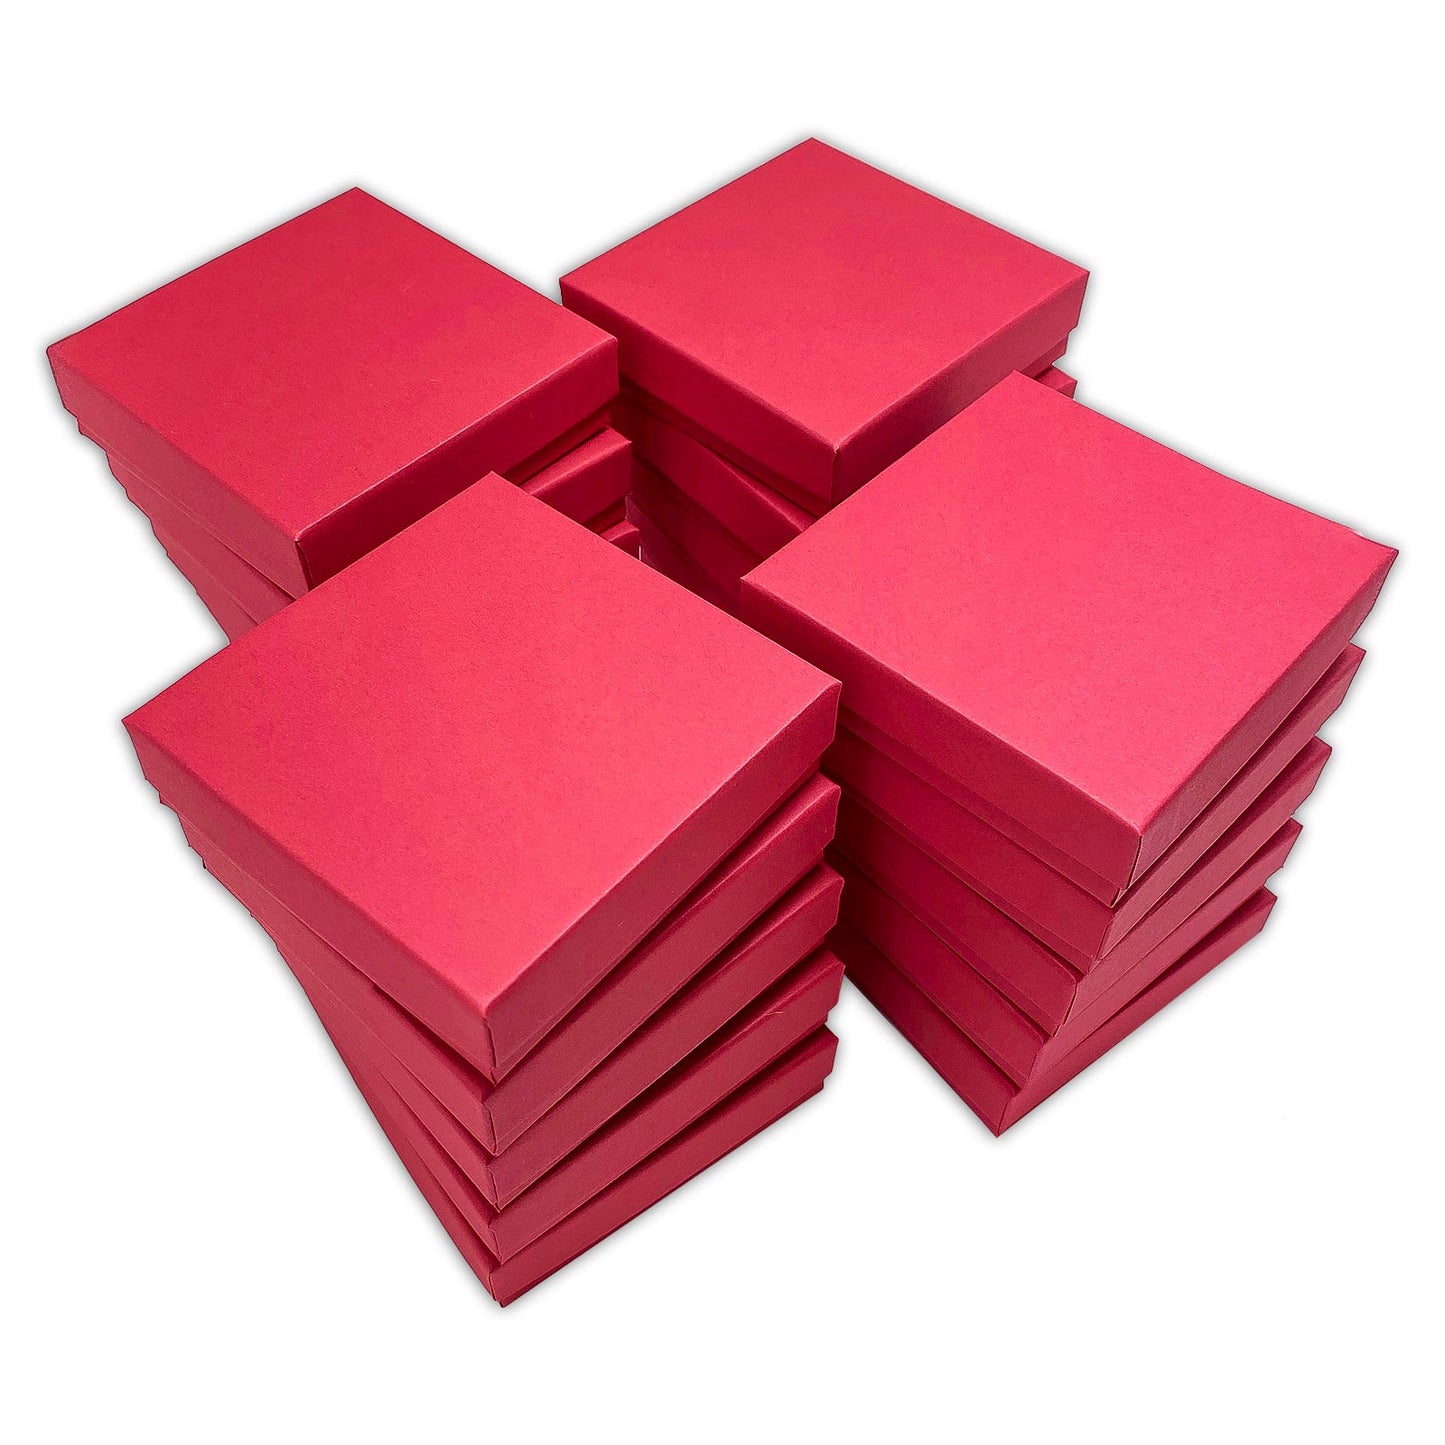 #33 - 3 1/2" x 3 1/2" x 1" Matte Red Cotton Filled Box